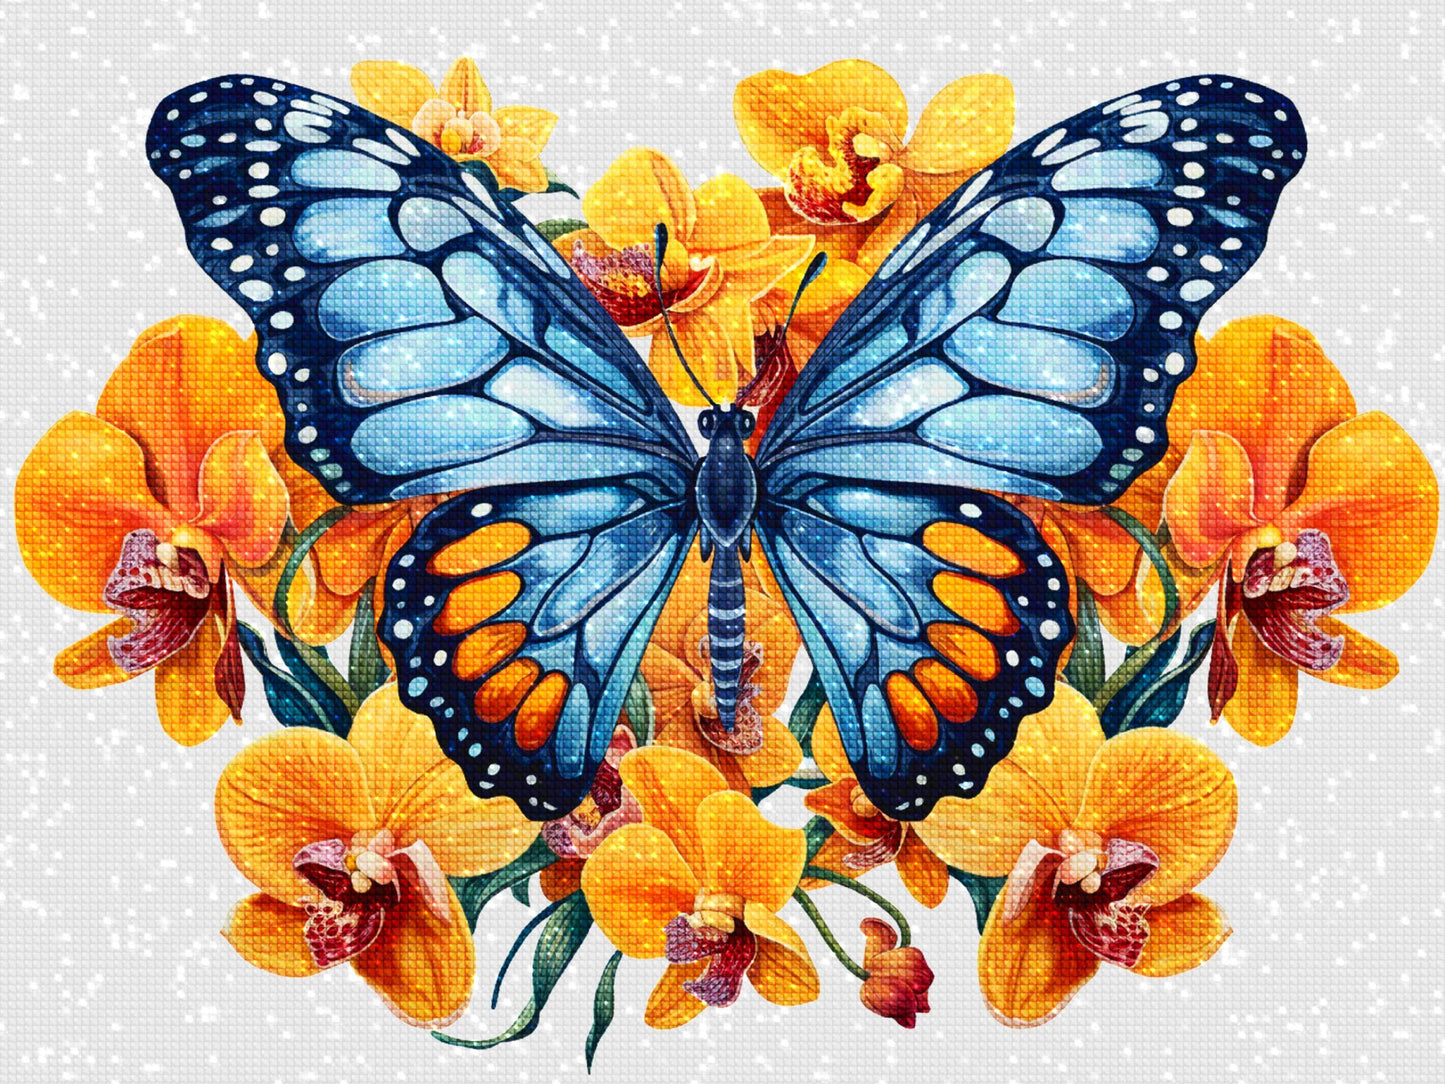 Butterfly - Diamond Painting Kit - Artslo.com